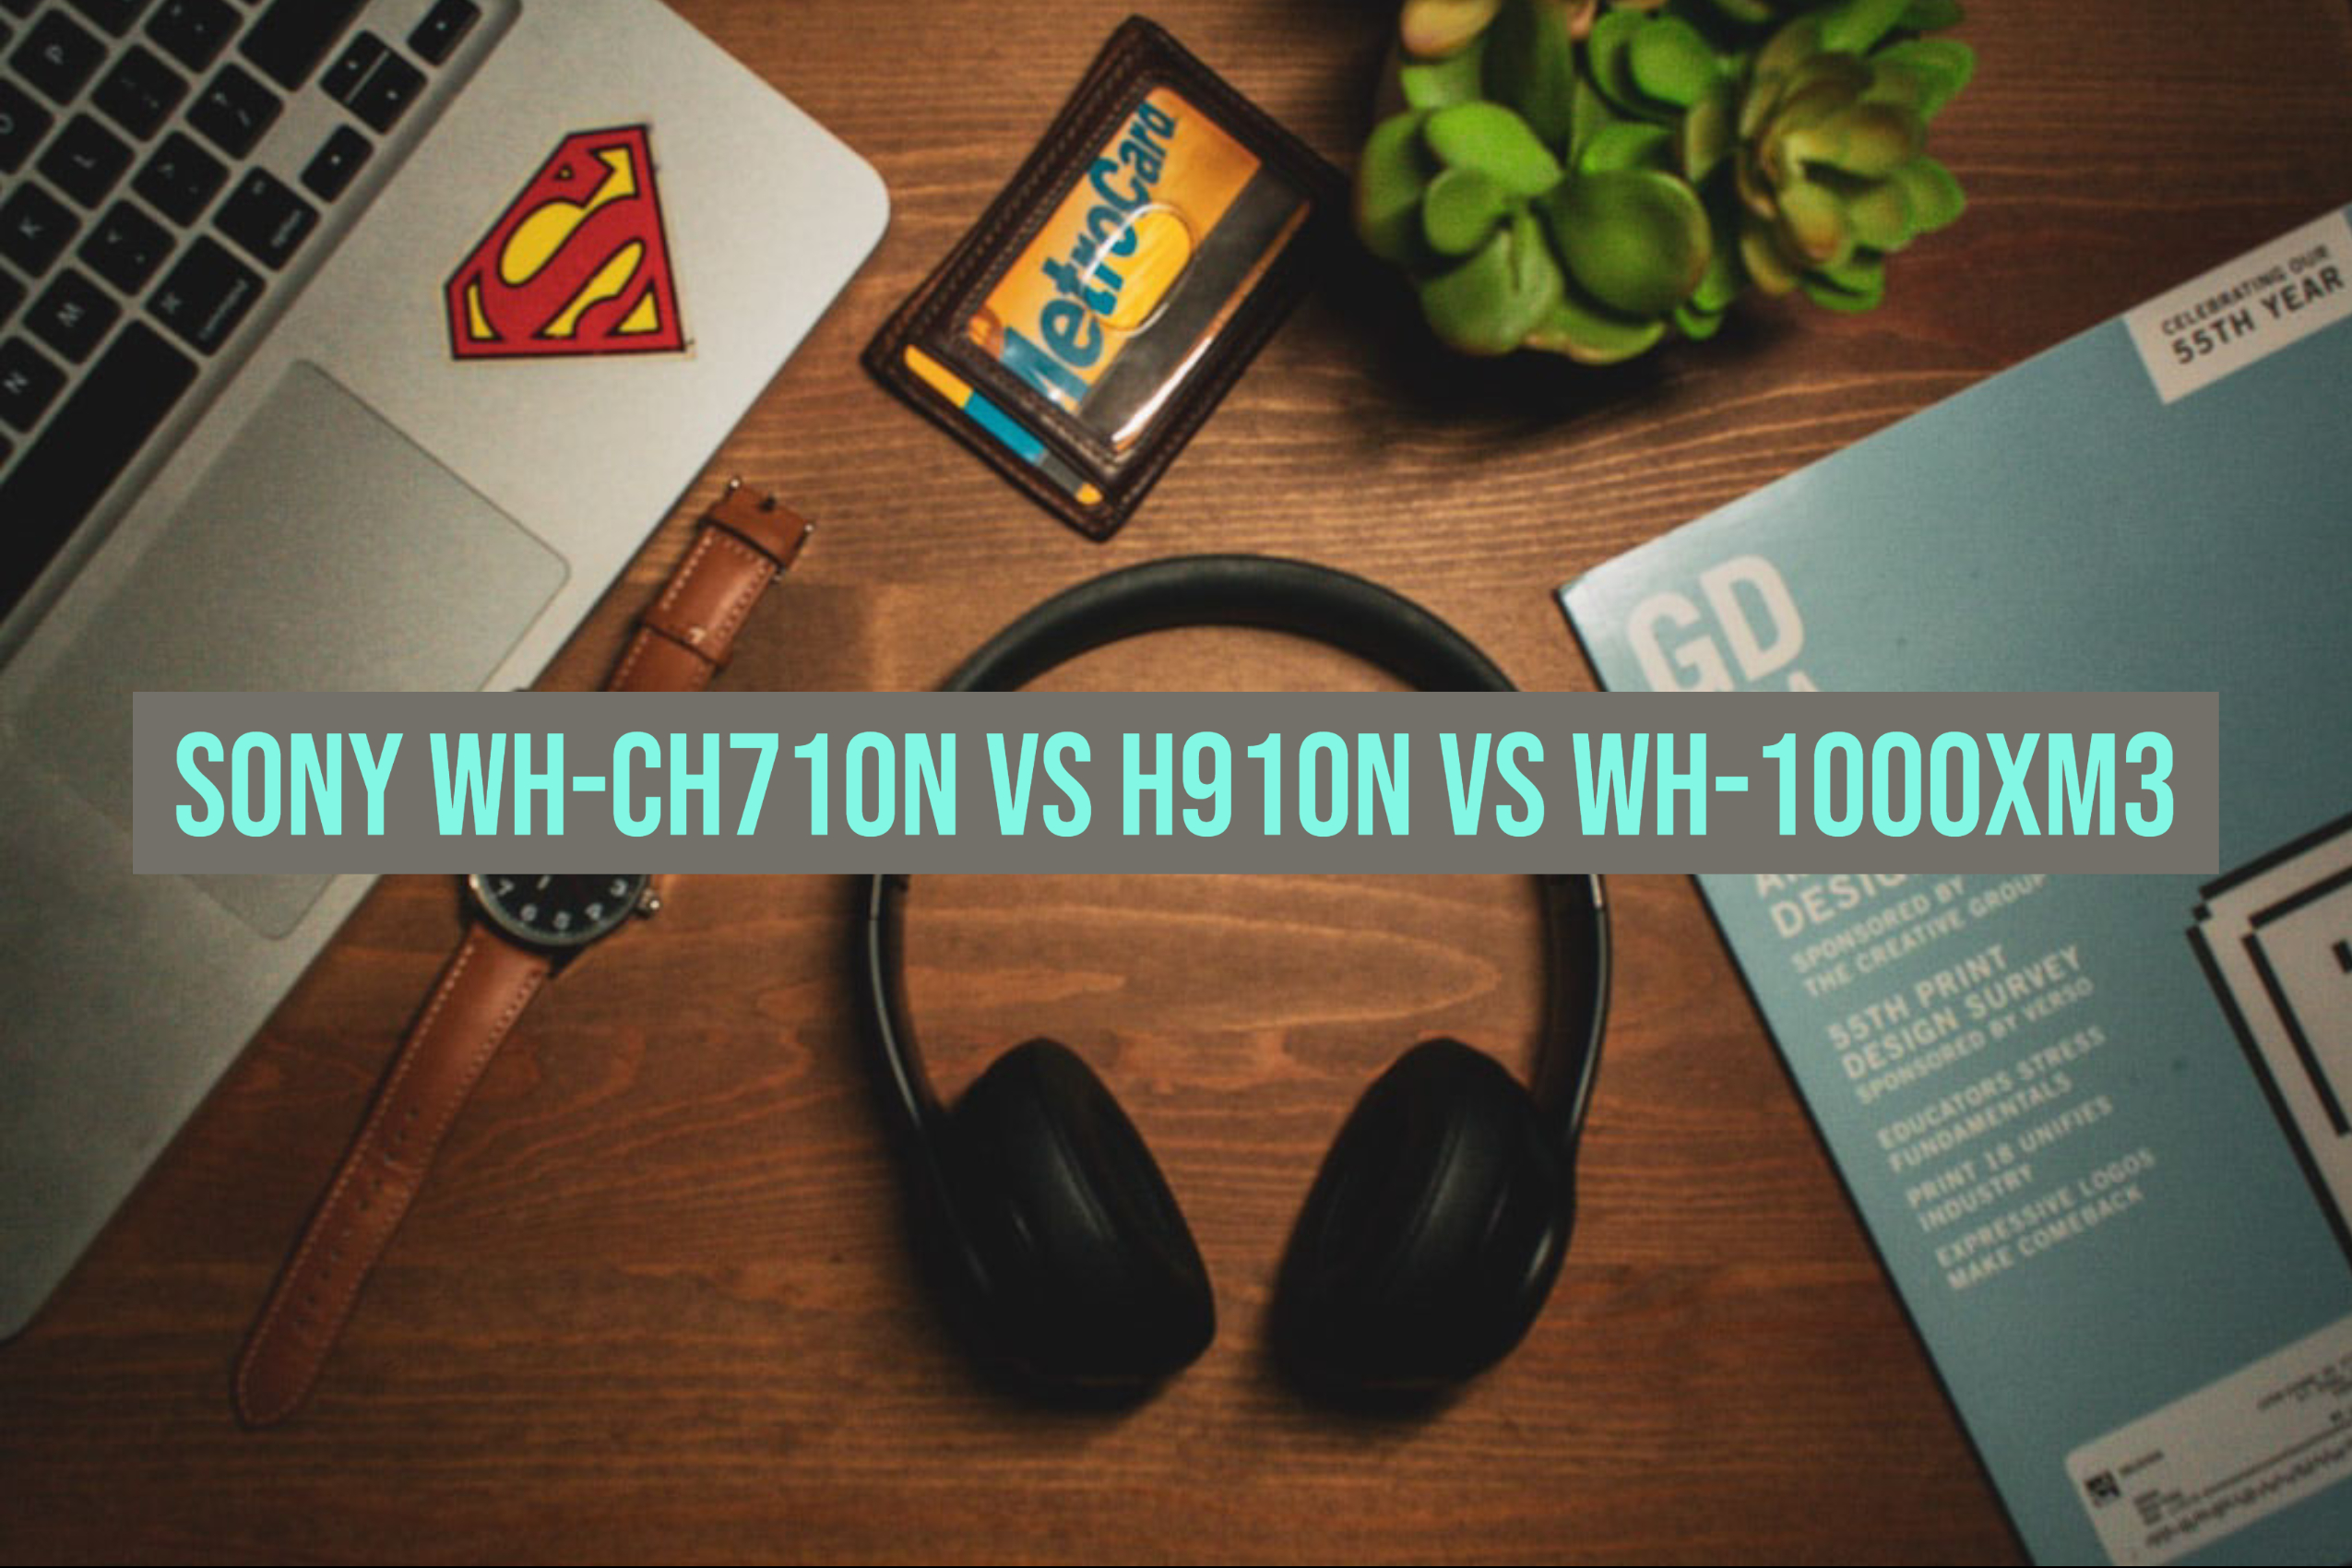 Sony WH-CH710N vs H910N vs WH-1000XM3